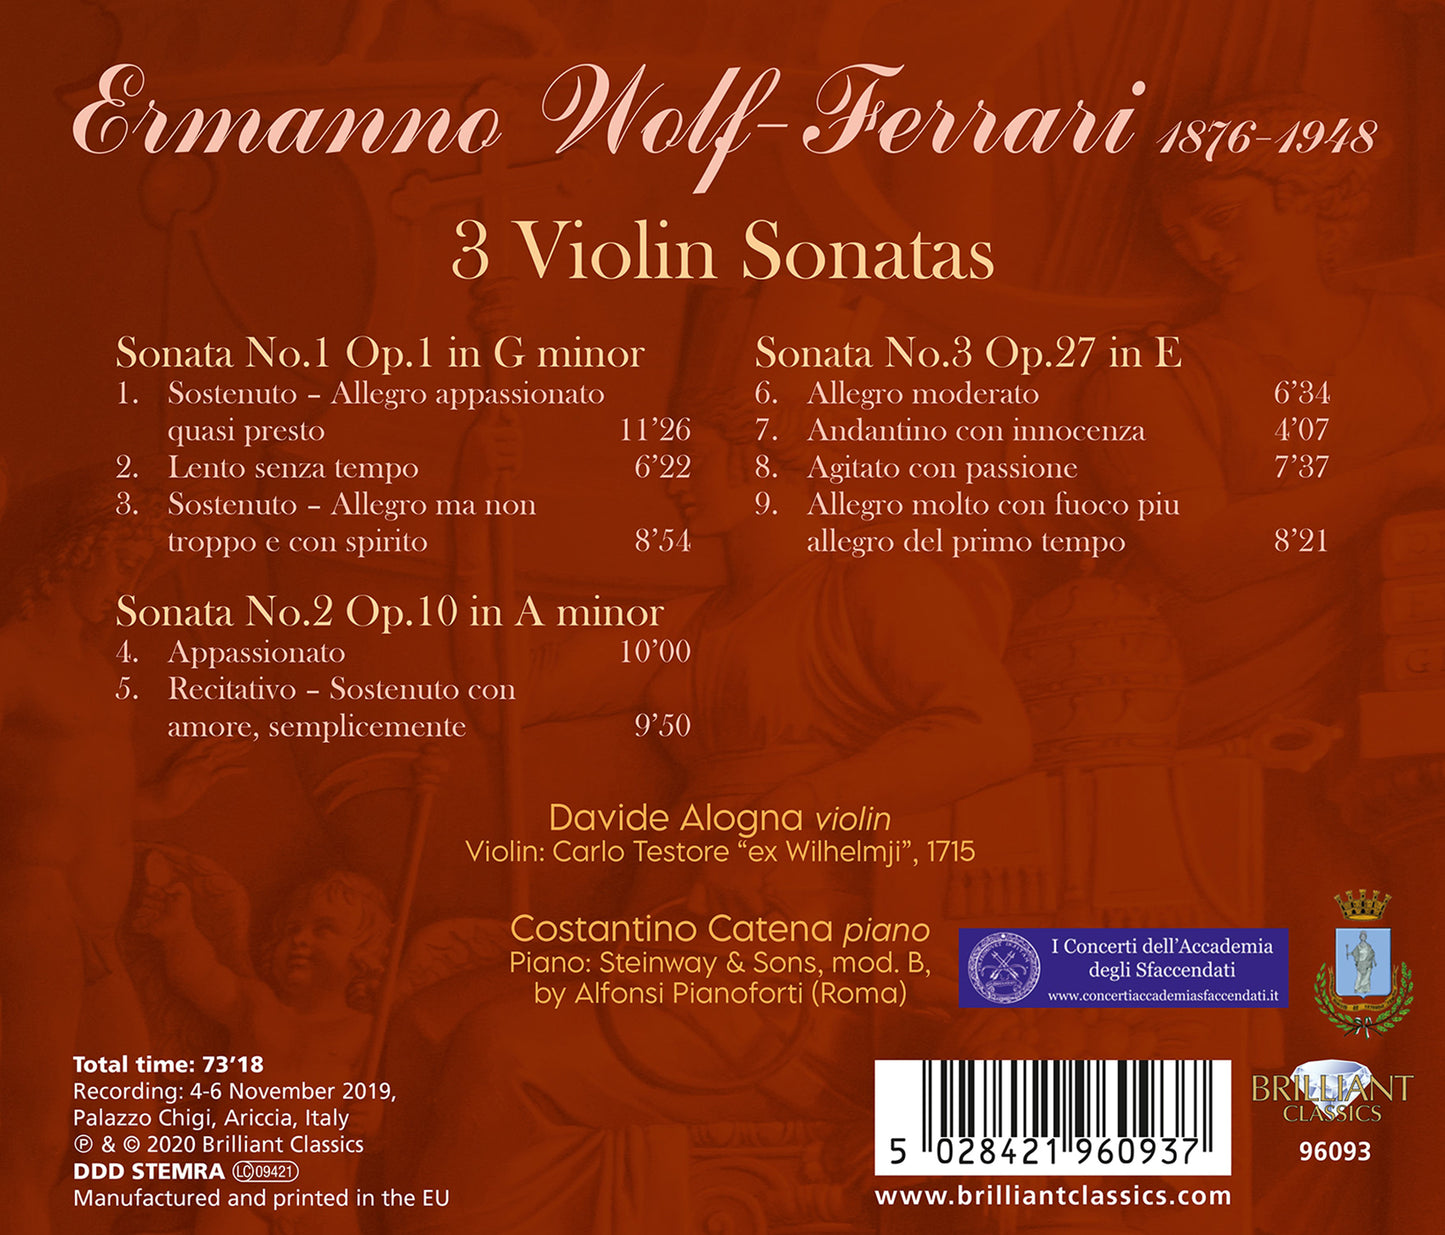 Wolf-Ferrari: 3 Violin Sonatas